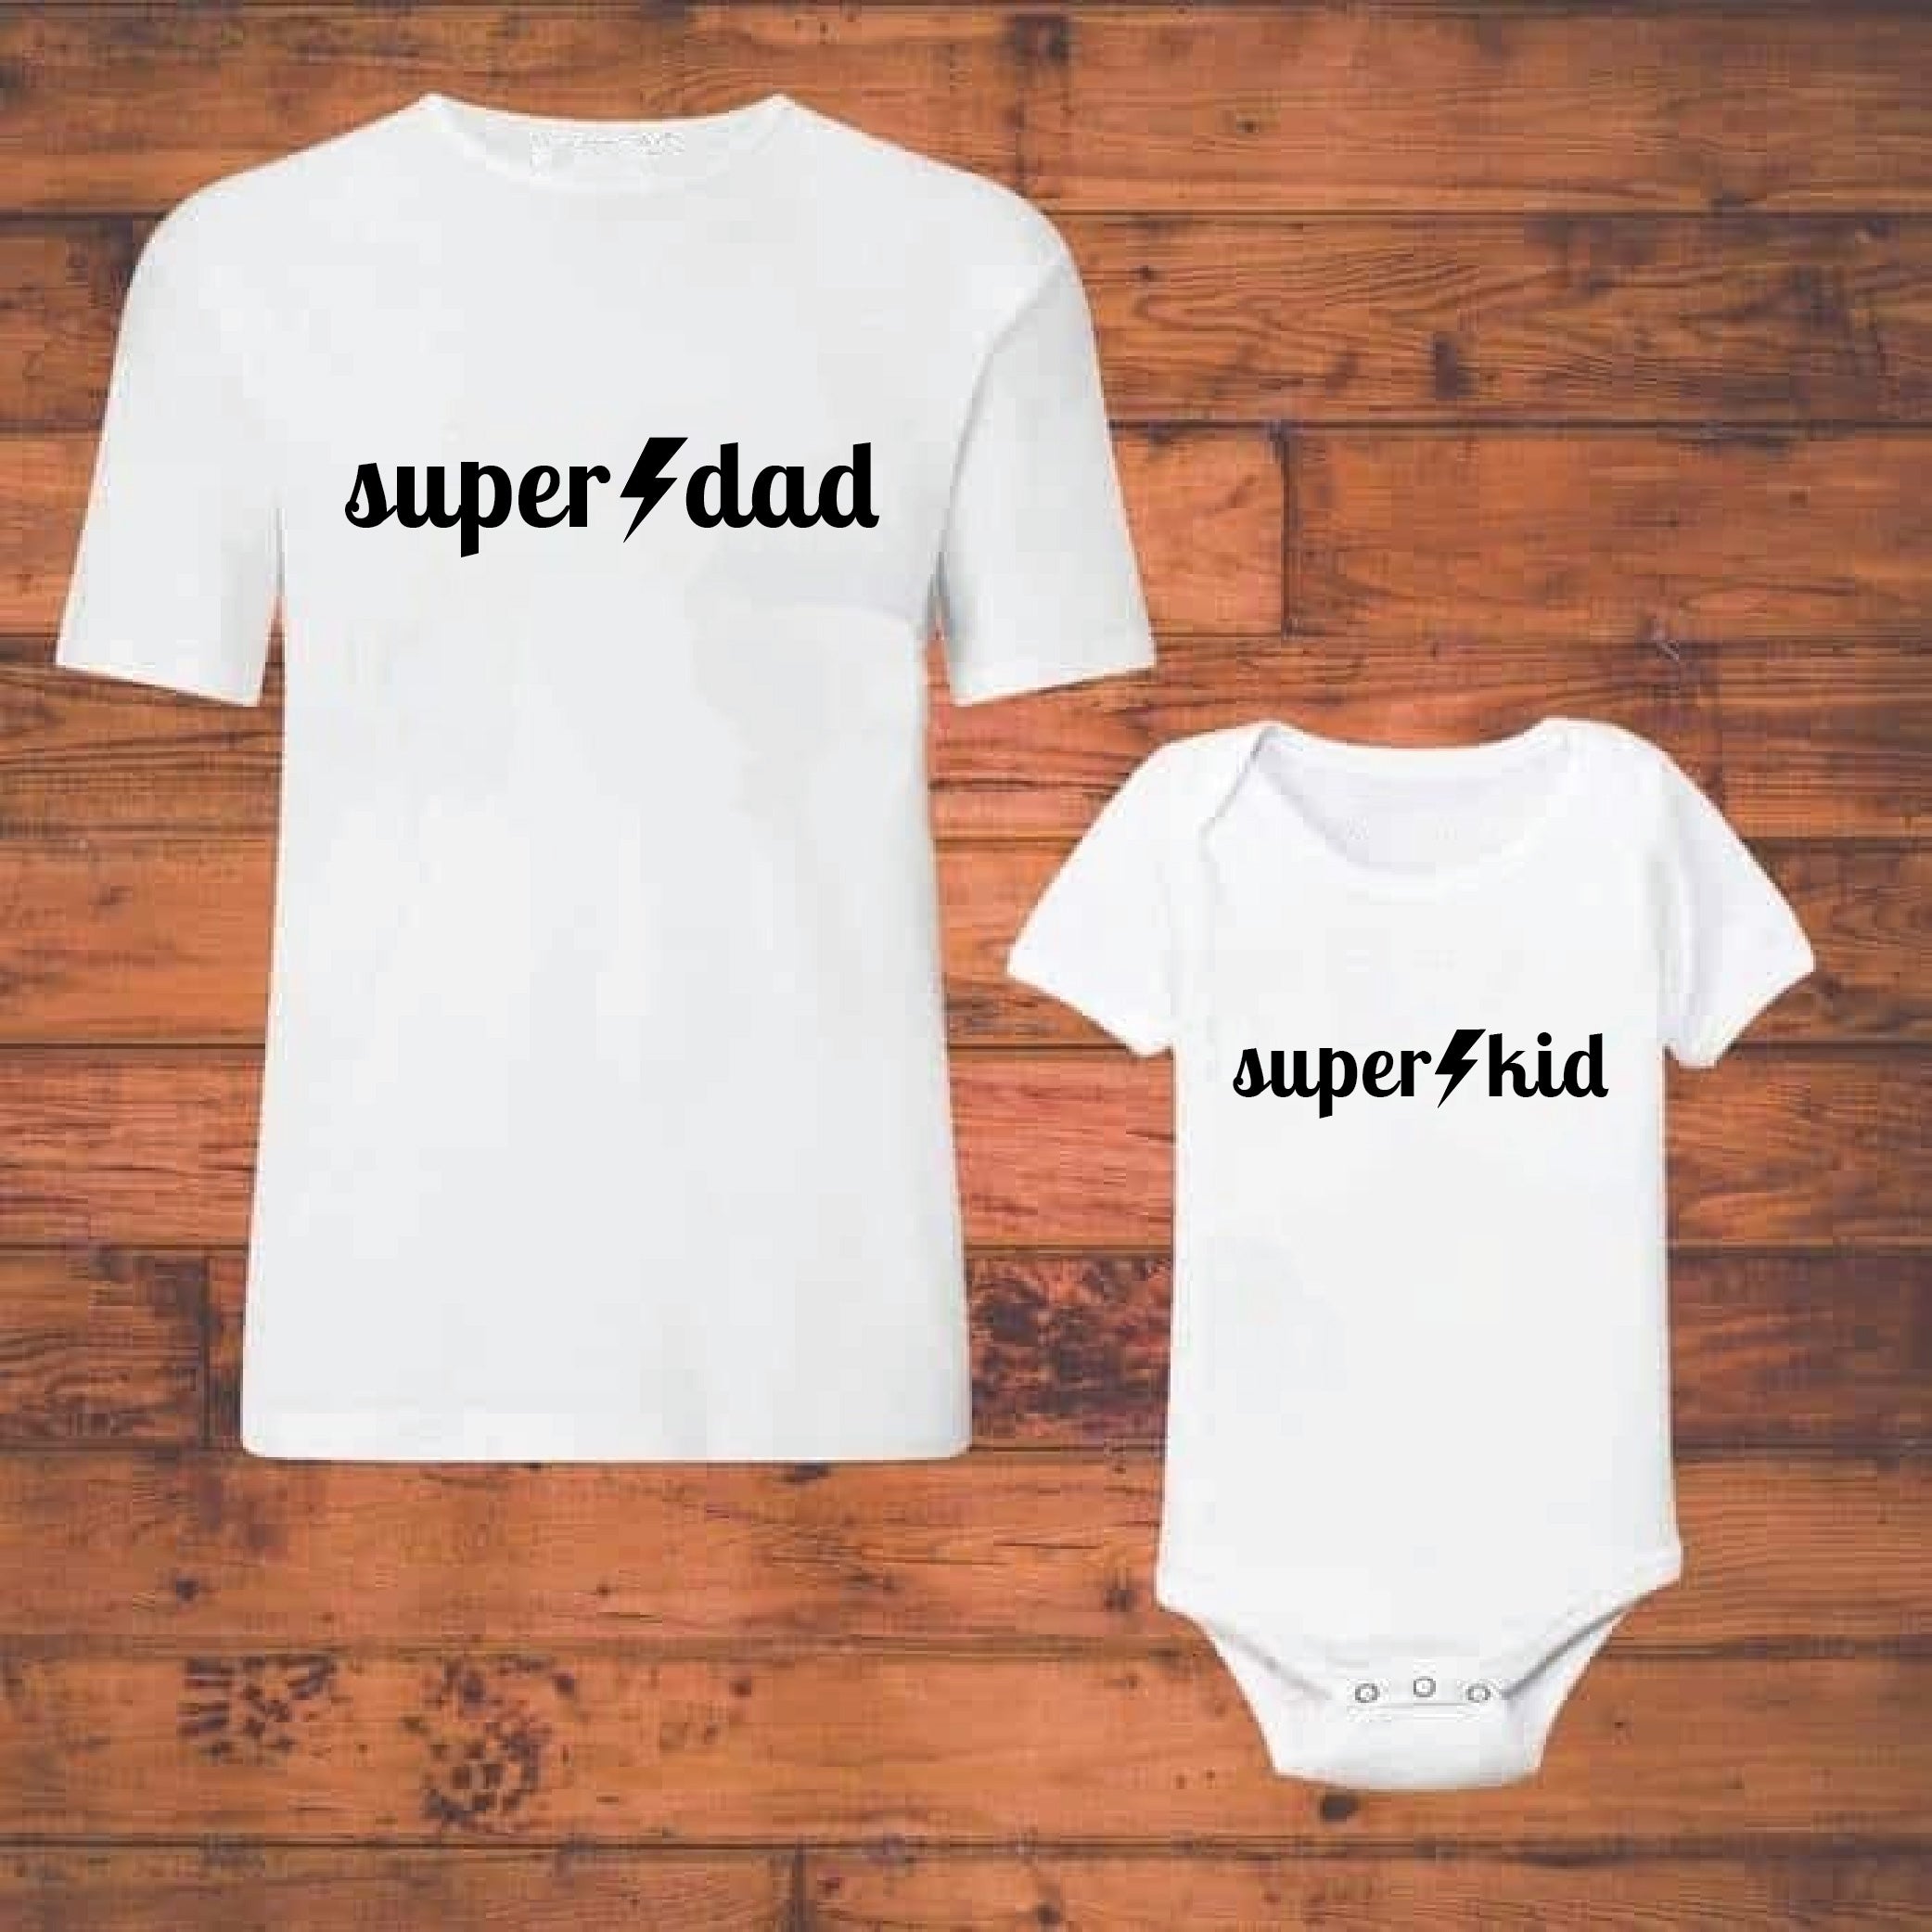 Super Dad, Super Kid - Combo of Adult Tshirt + Kid's Tshirt/Onesie